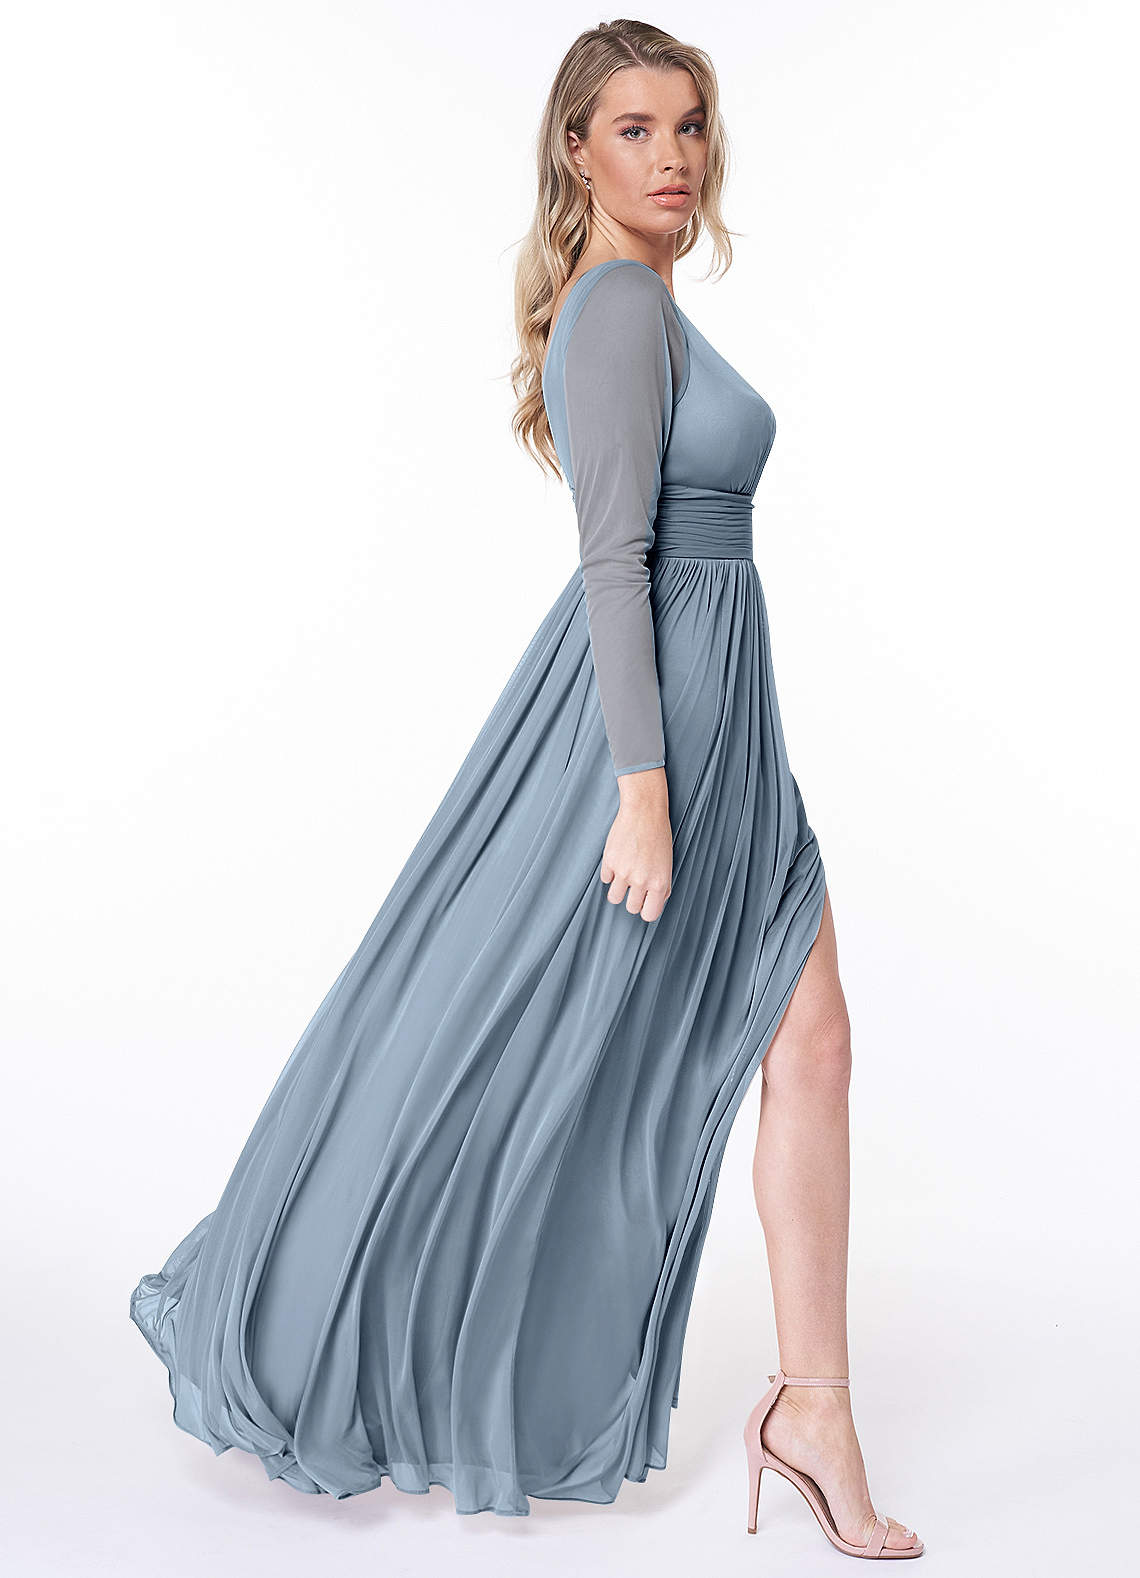 Azazie Bexley Bridesmaid Dresses A-Line Long Sleeve Mesh Floor-Length Dress image1